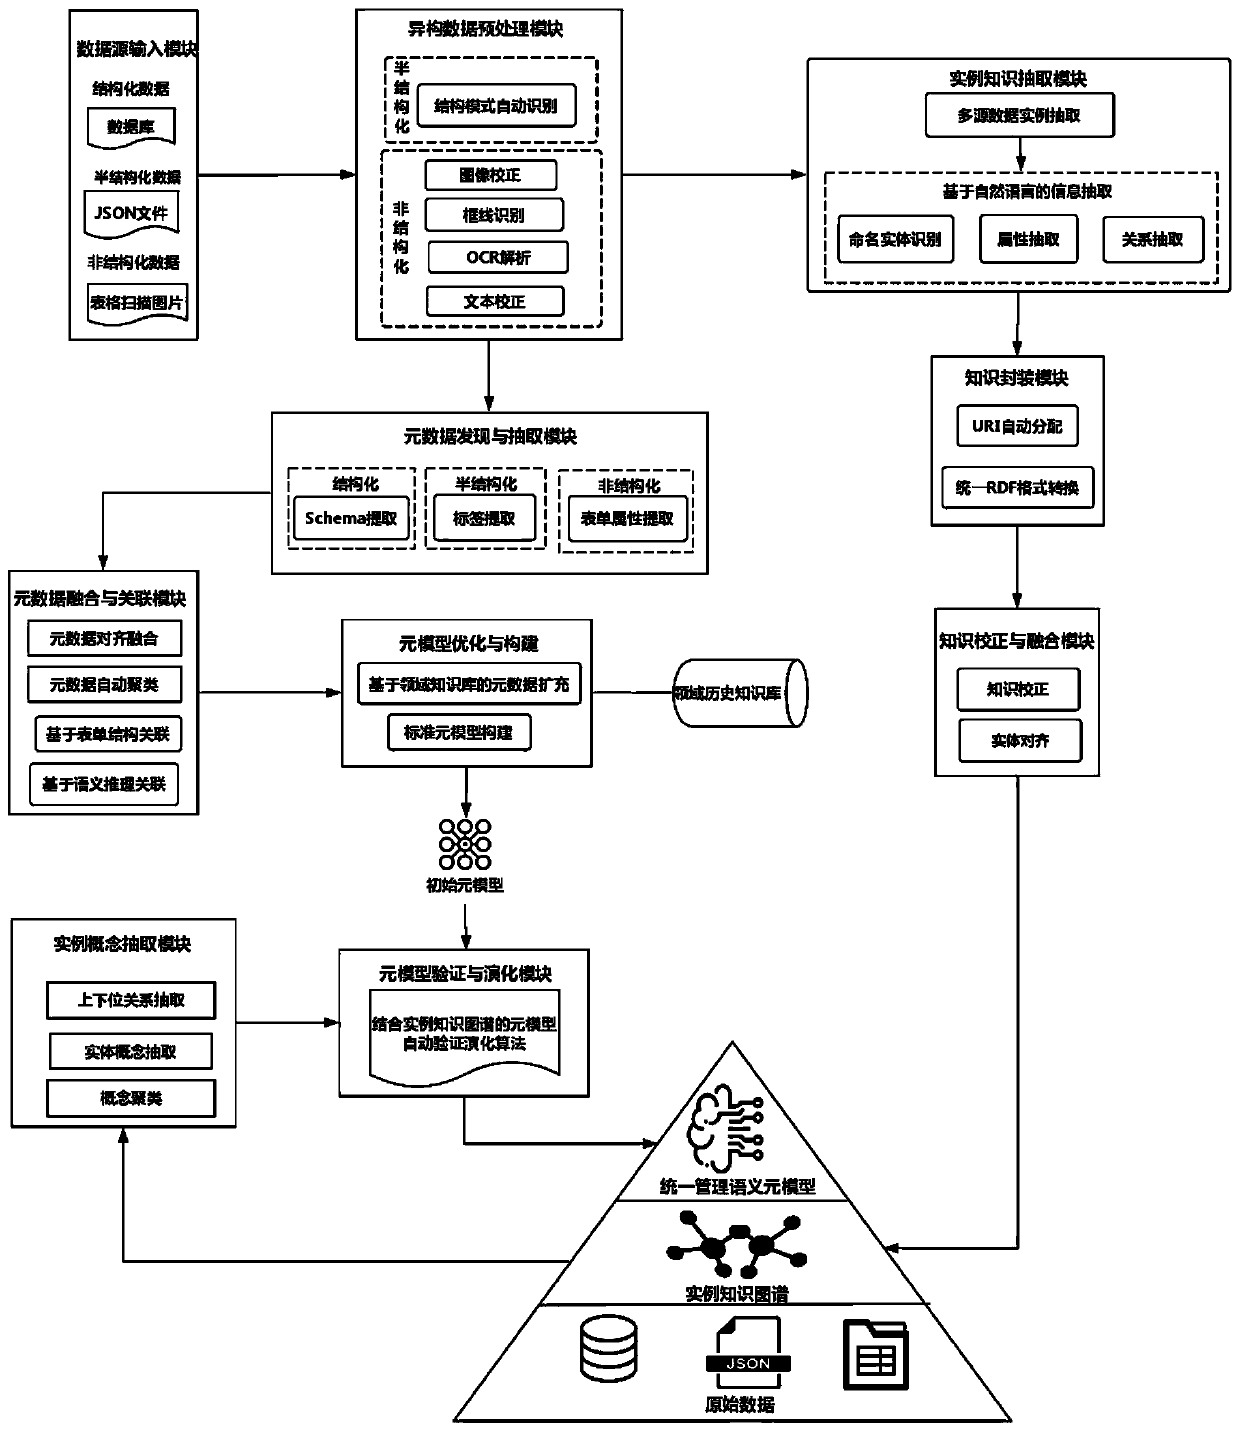 System and method for constructing autonomous data lake based on linked data